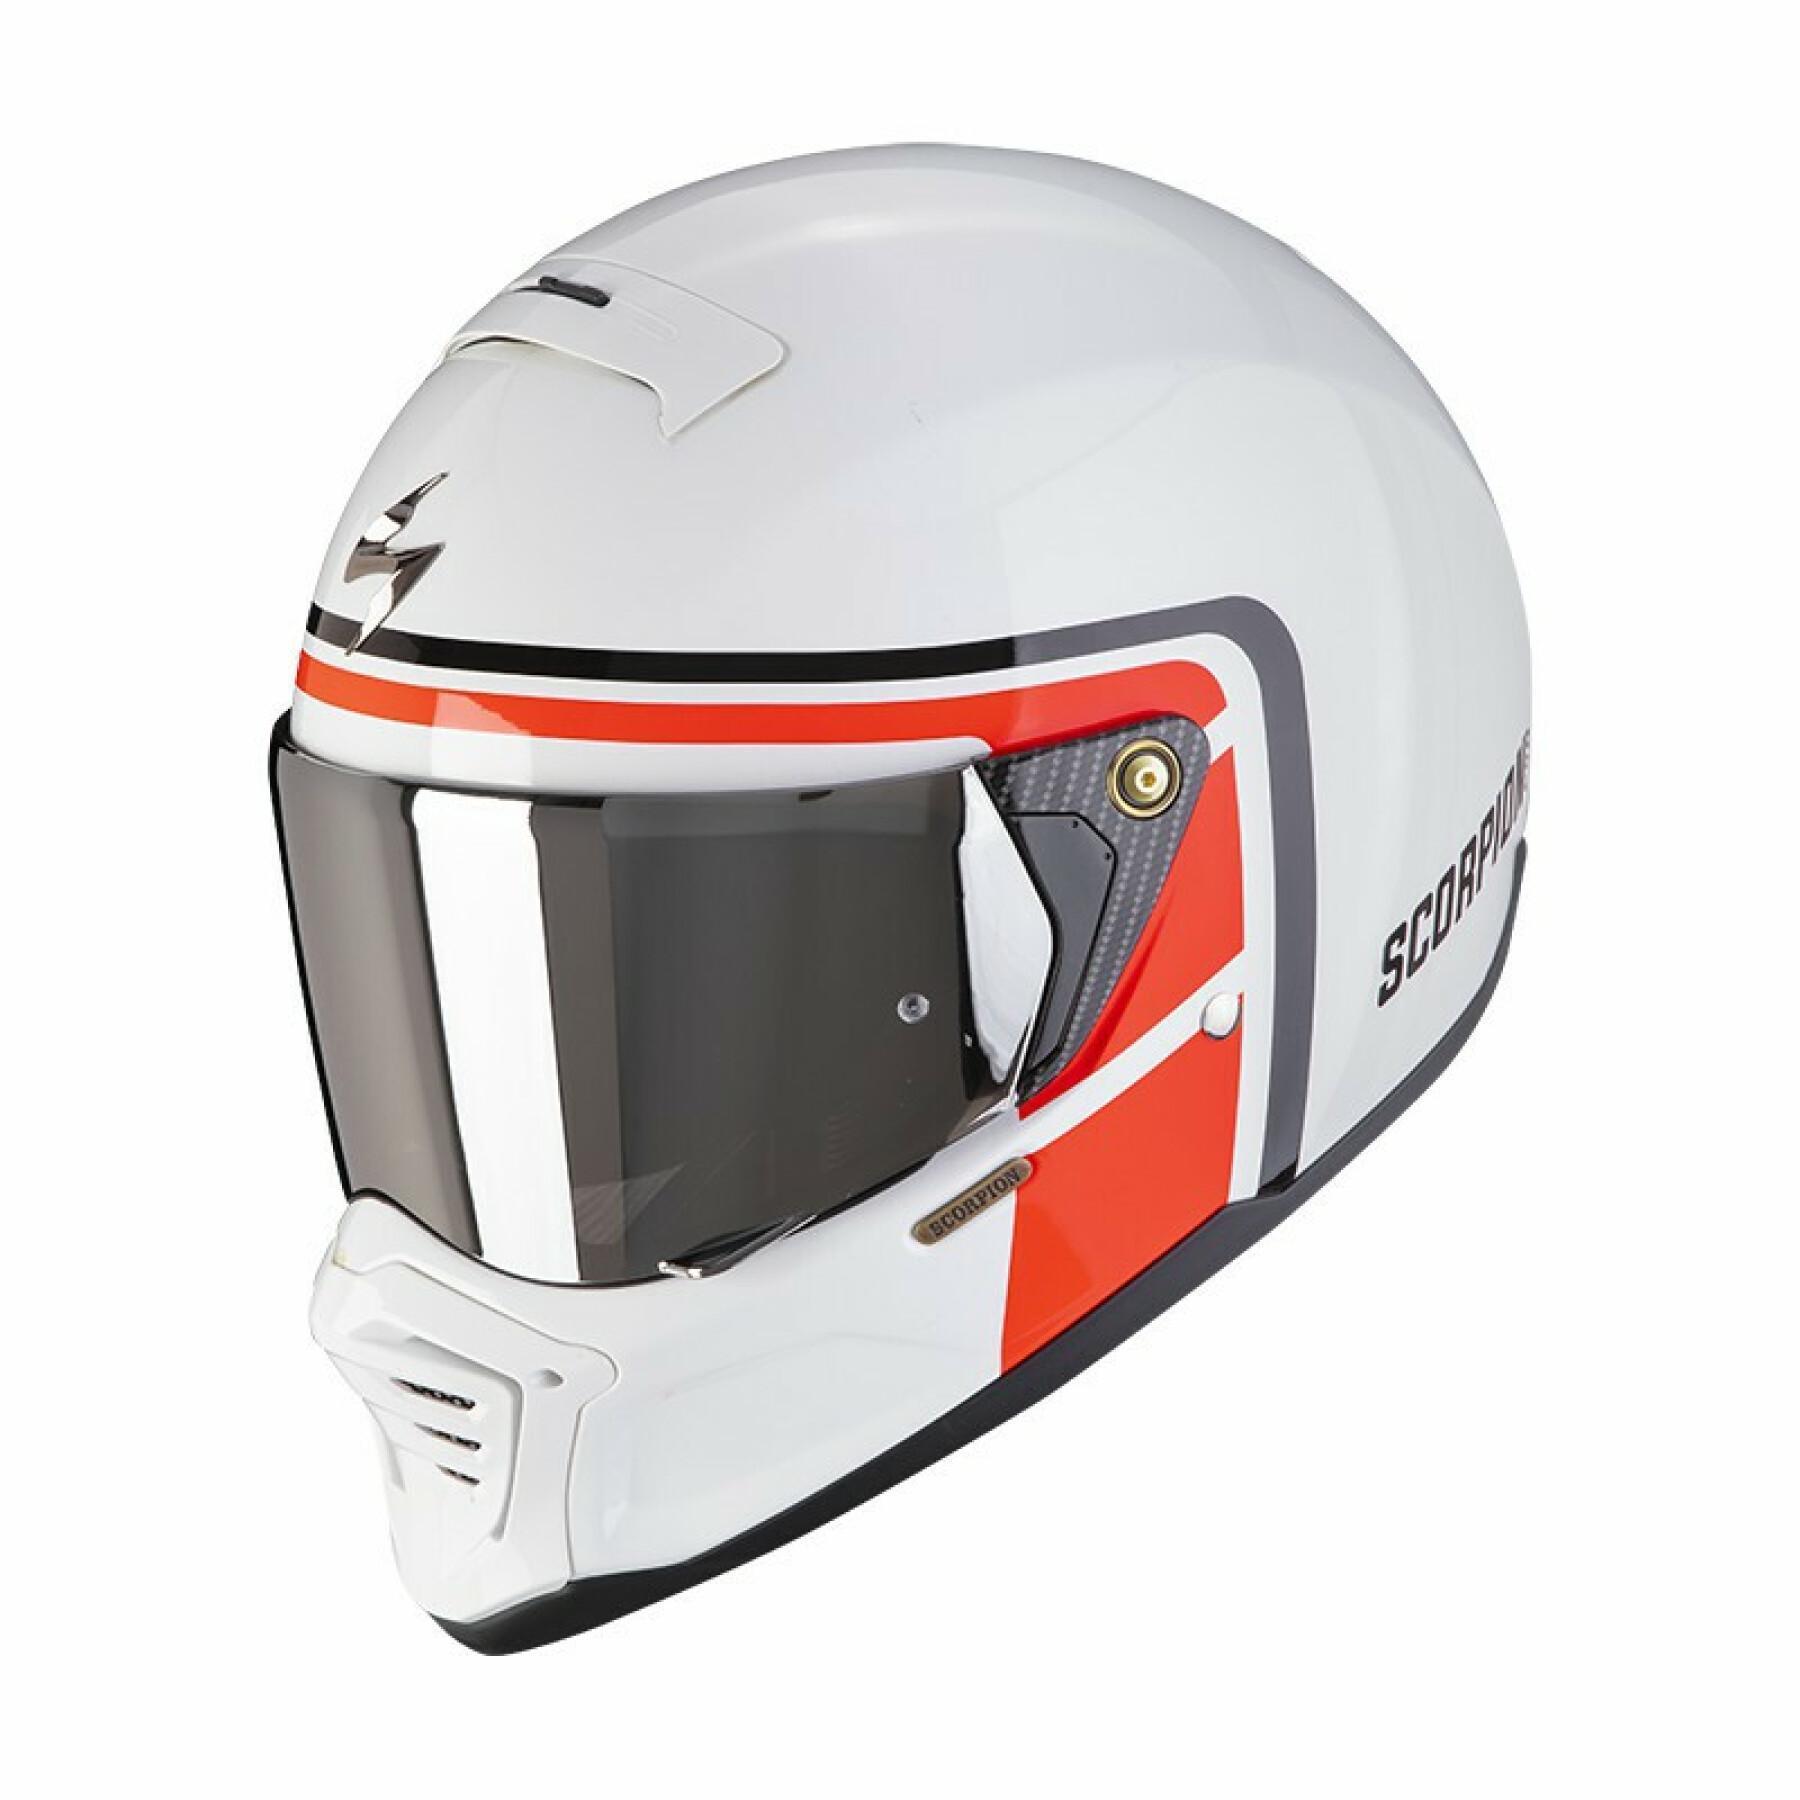 Full face helmet Scorpion Exo-HX1 NOSTALGIA